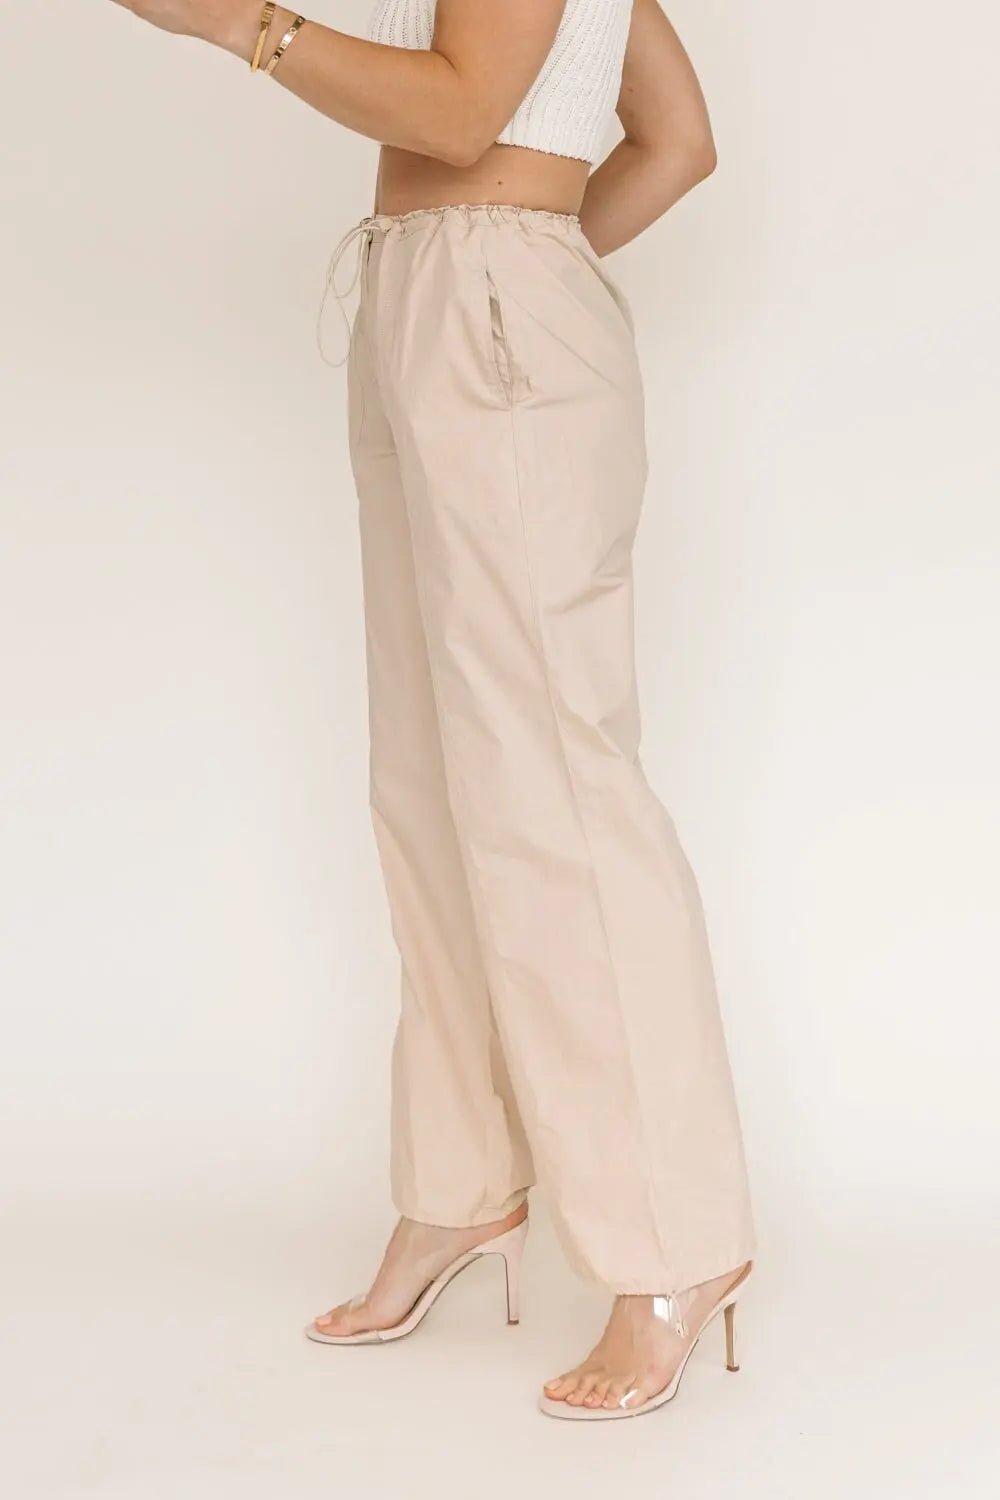 Style Swap Khaki Parachute Pants - JO+CO